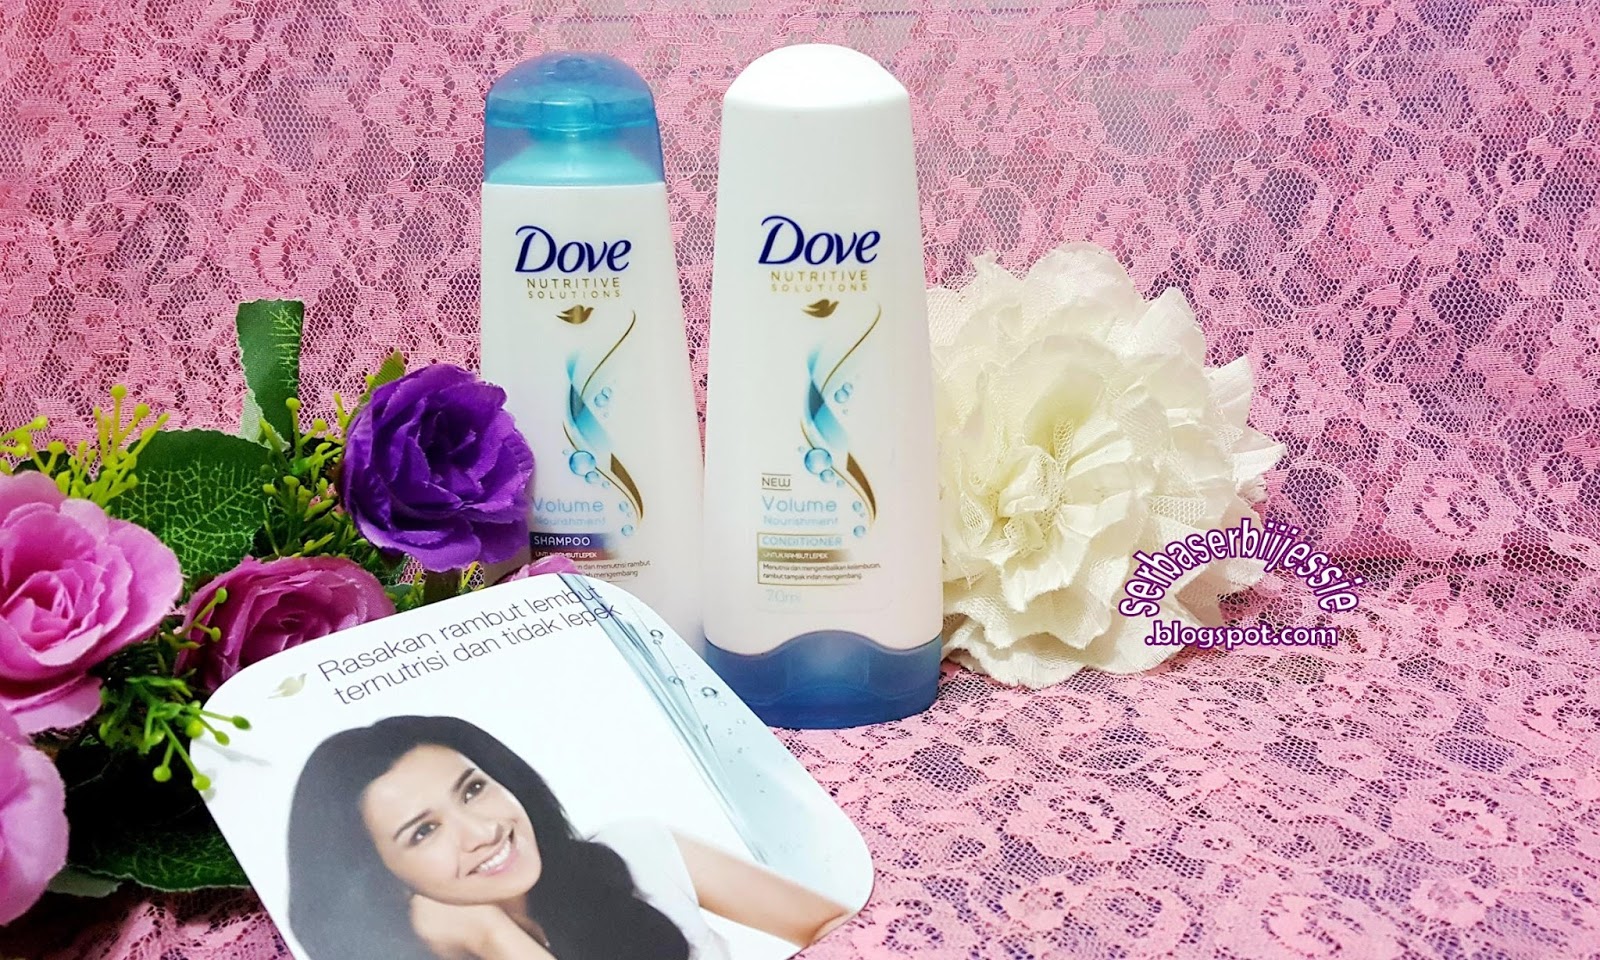 Rambut Anti Lepek Dengan Dove Volume Nourishment Shampoo And